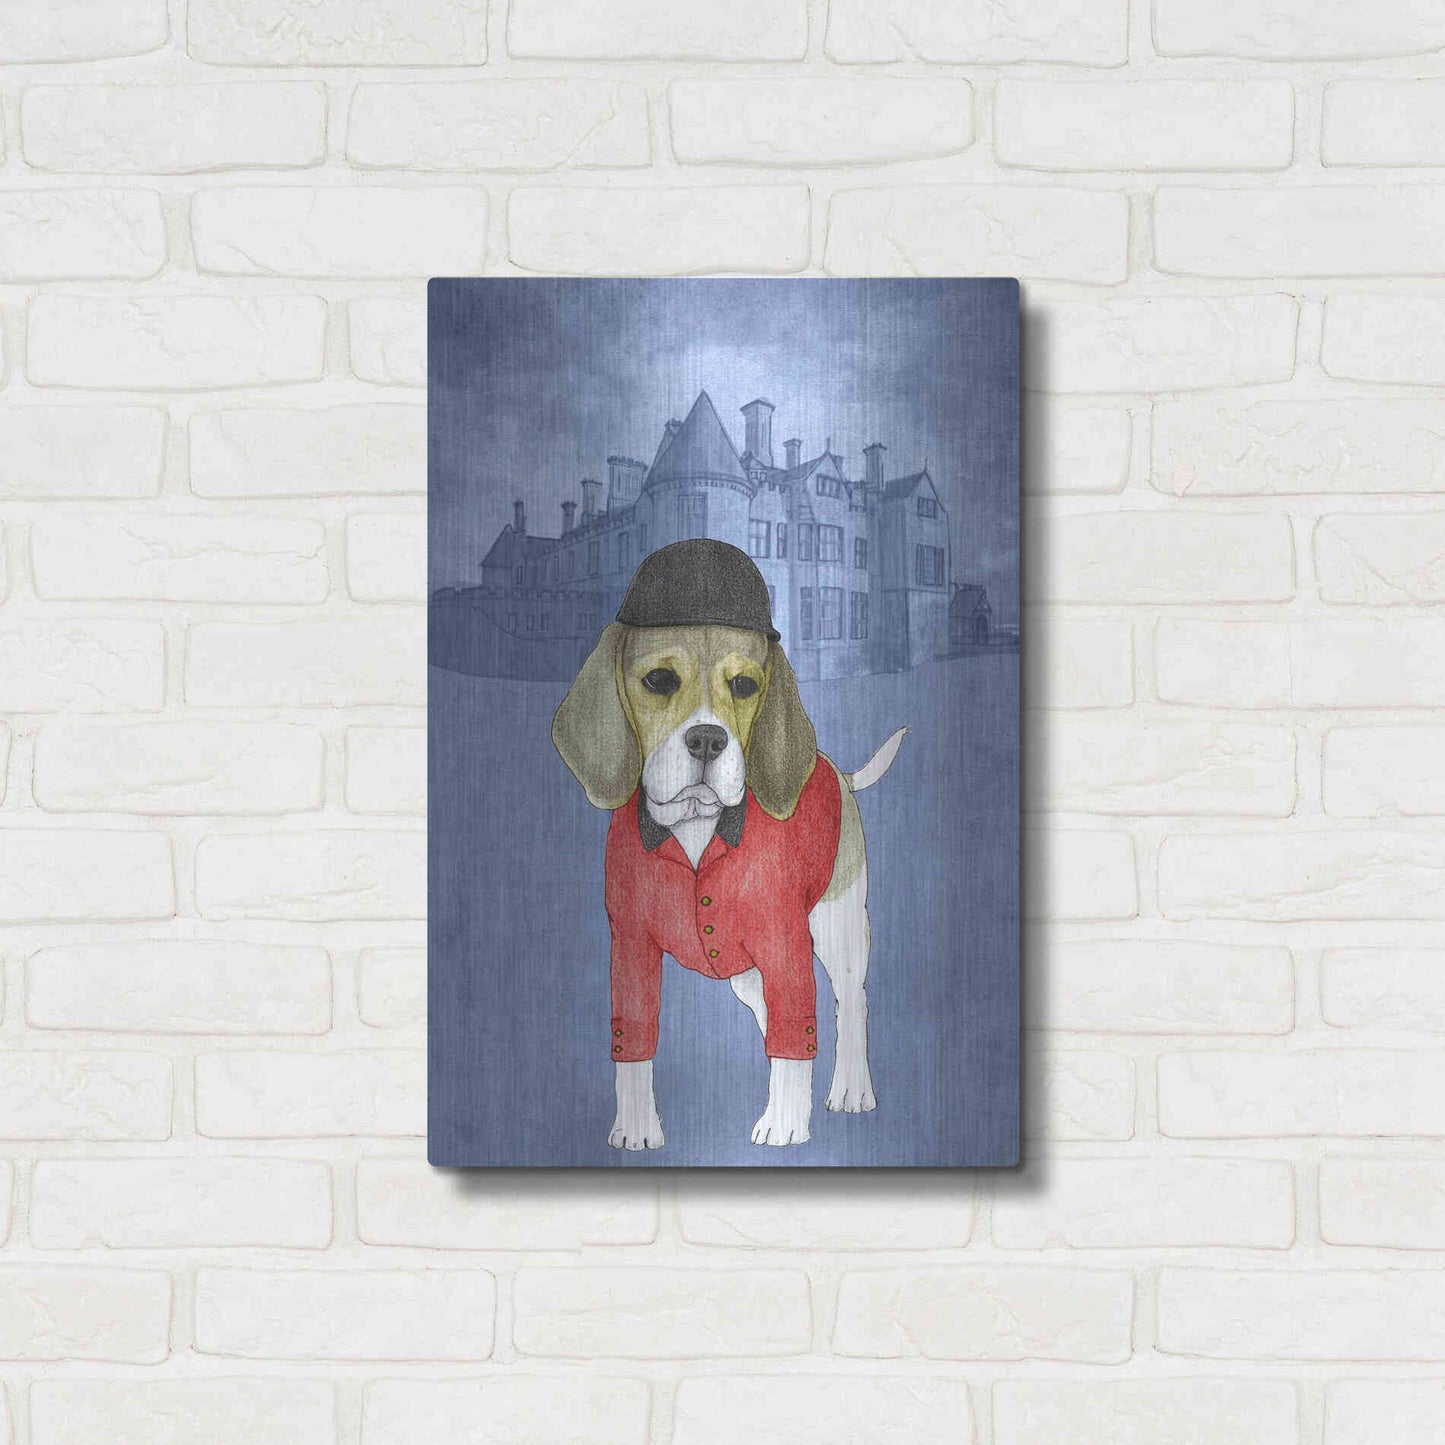 Luxe Metal Art 'Beagle with Beaulieu Palace' by Barruf Metal Wall Art,16x24